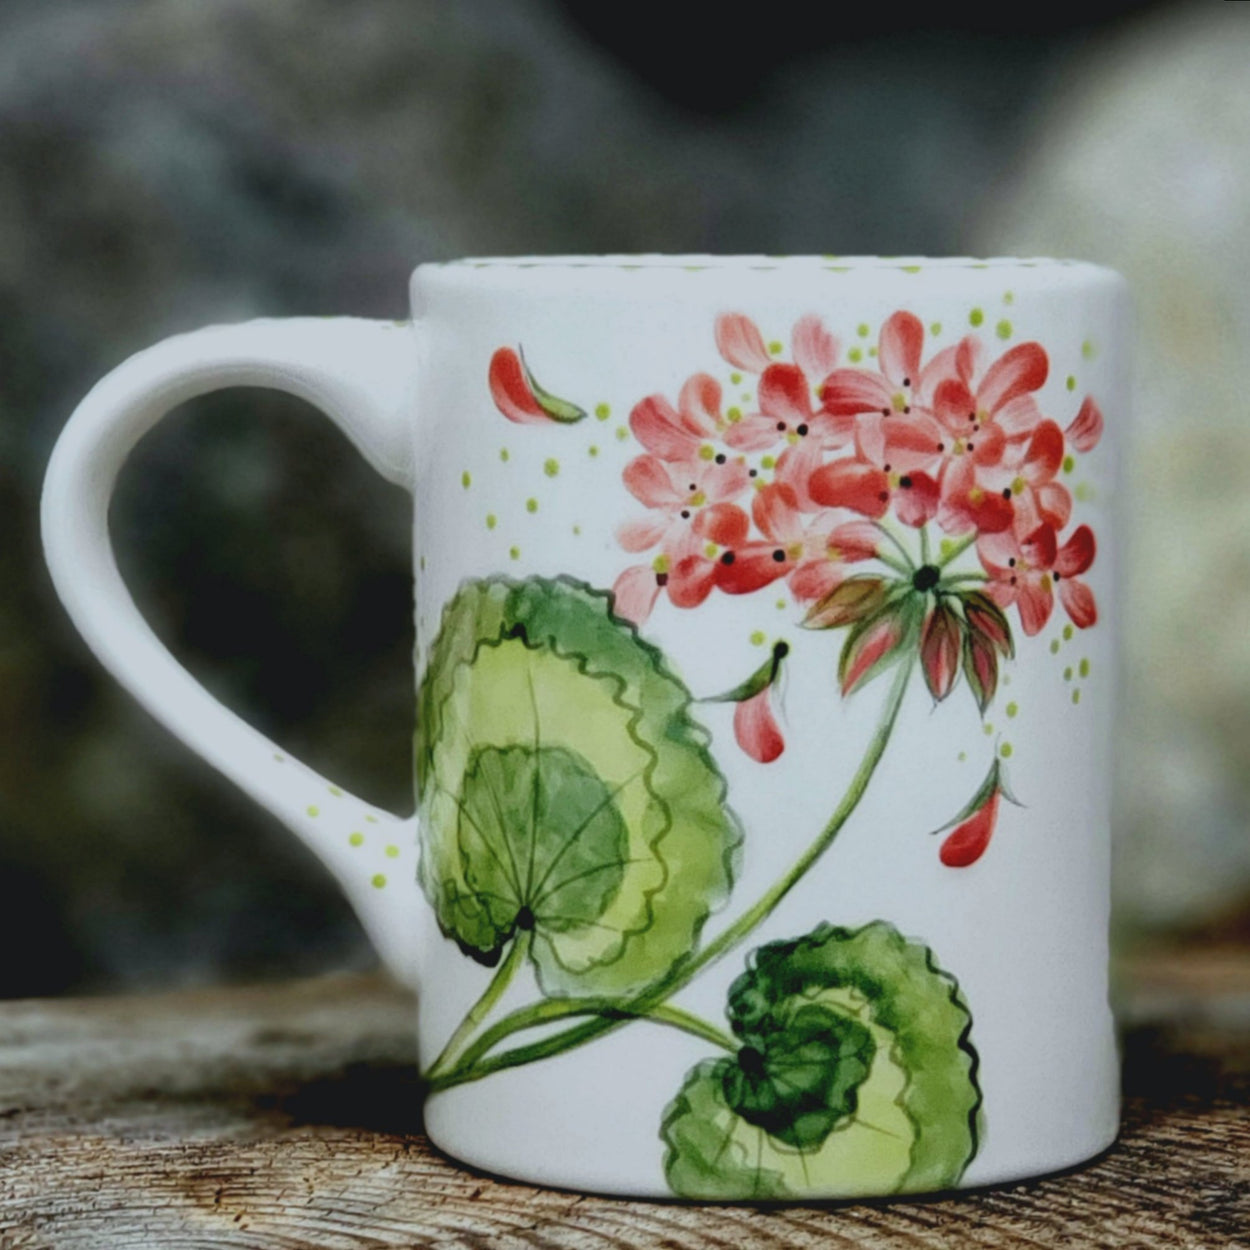 Beautiful hand painted mug with peachy Geraniums dancing all around it. kiln fired ceramic 16 oz. mug